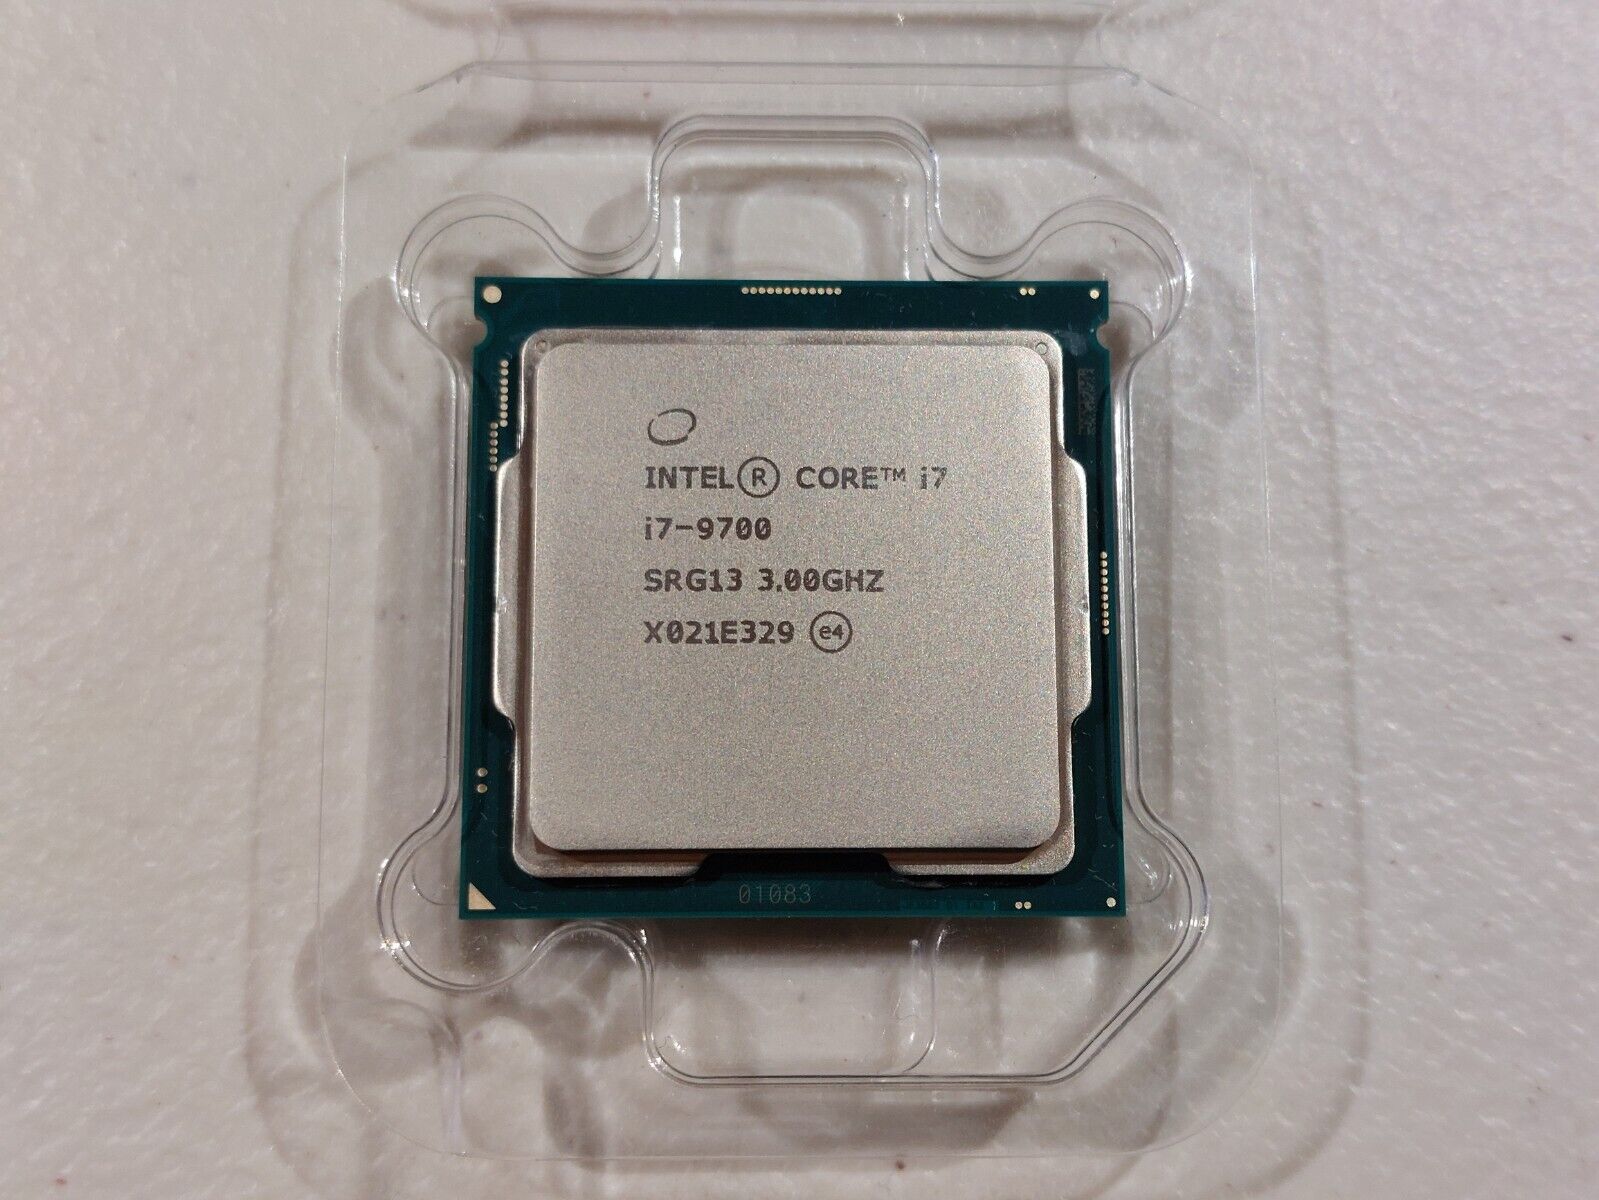 Intel Core i7-9700 3.0GHz LGA1151 (300 Series) Coffee Lake Desktop Processor